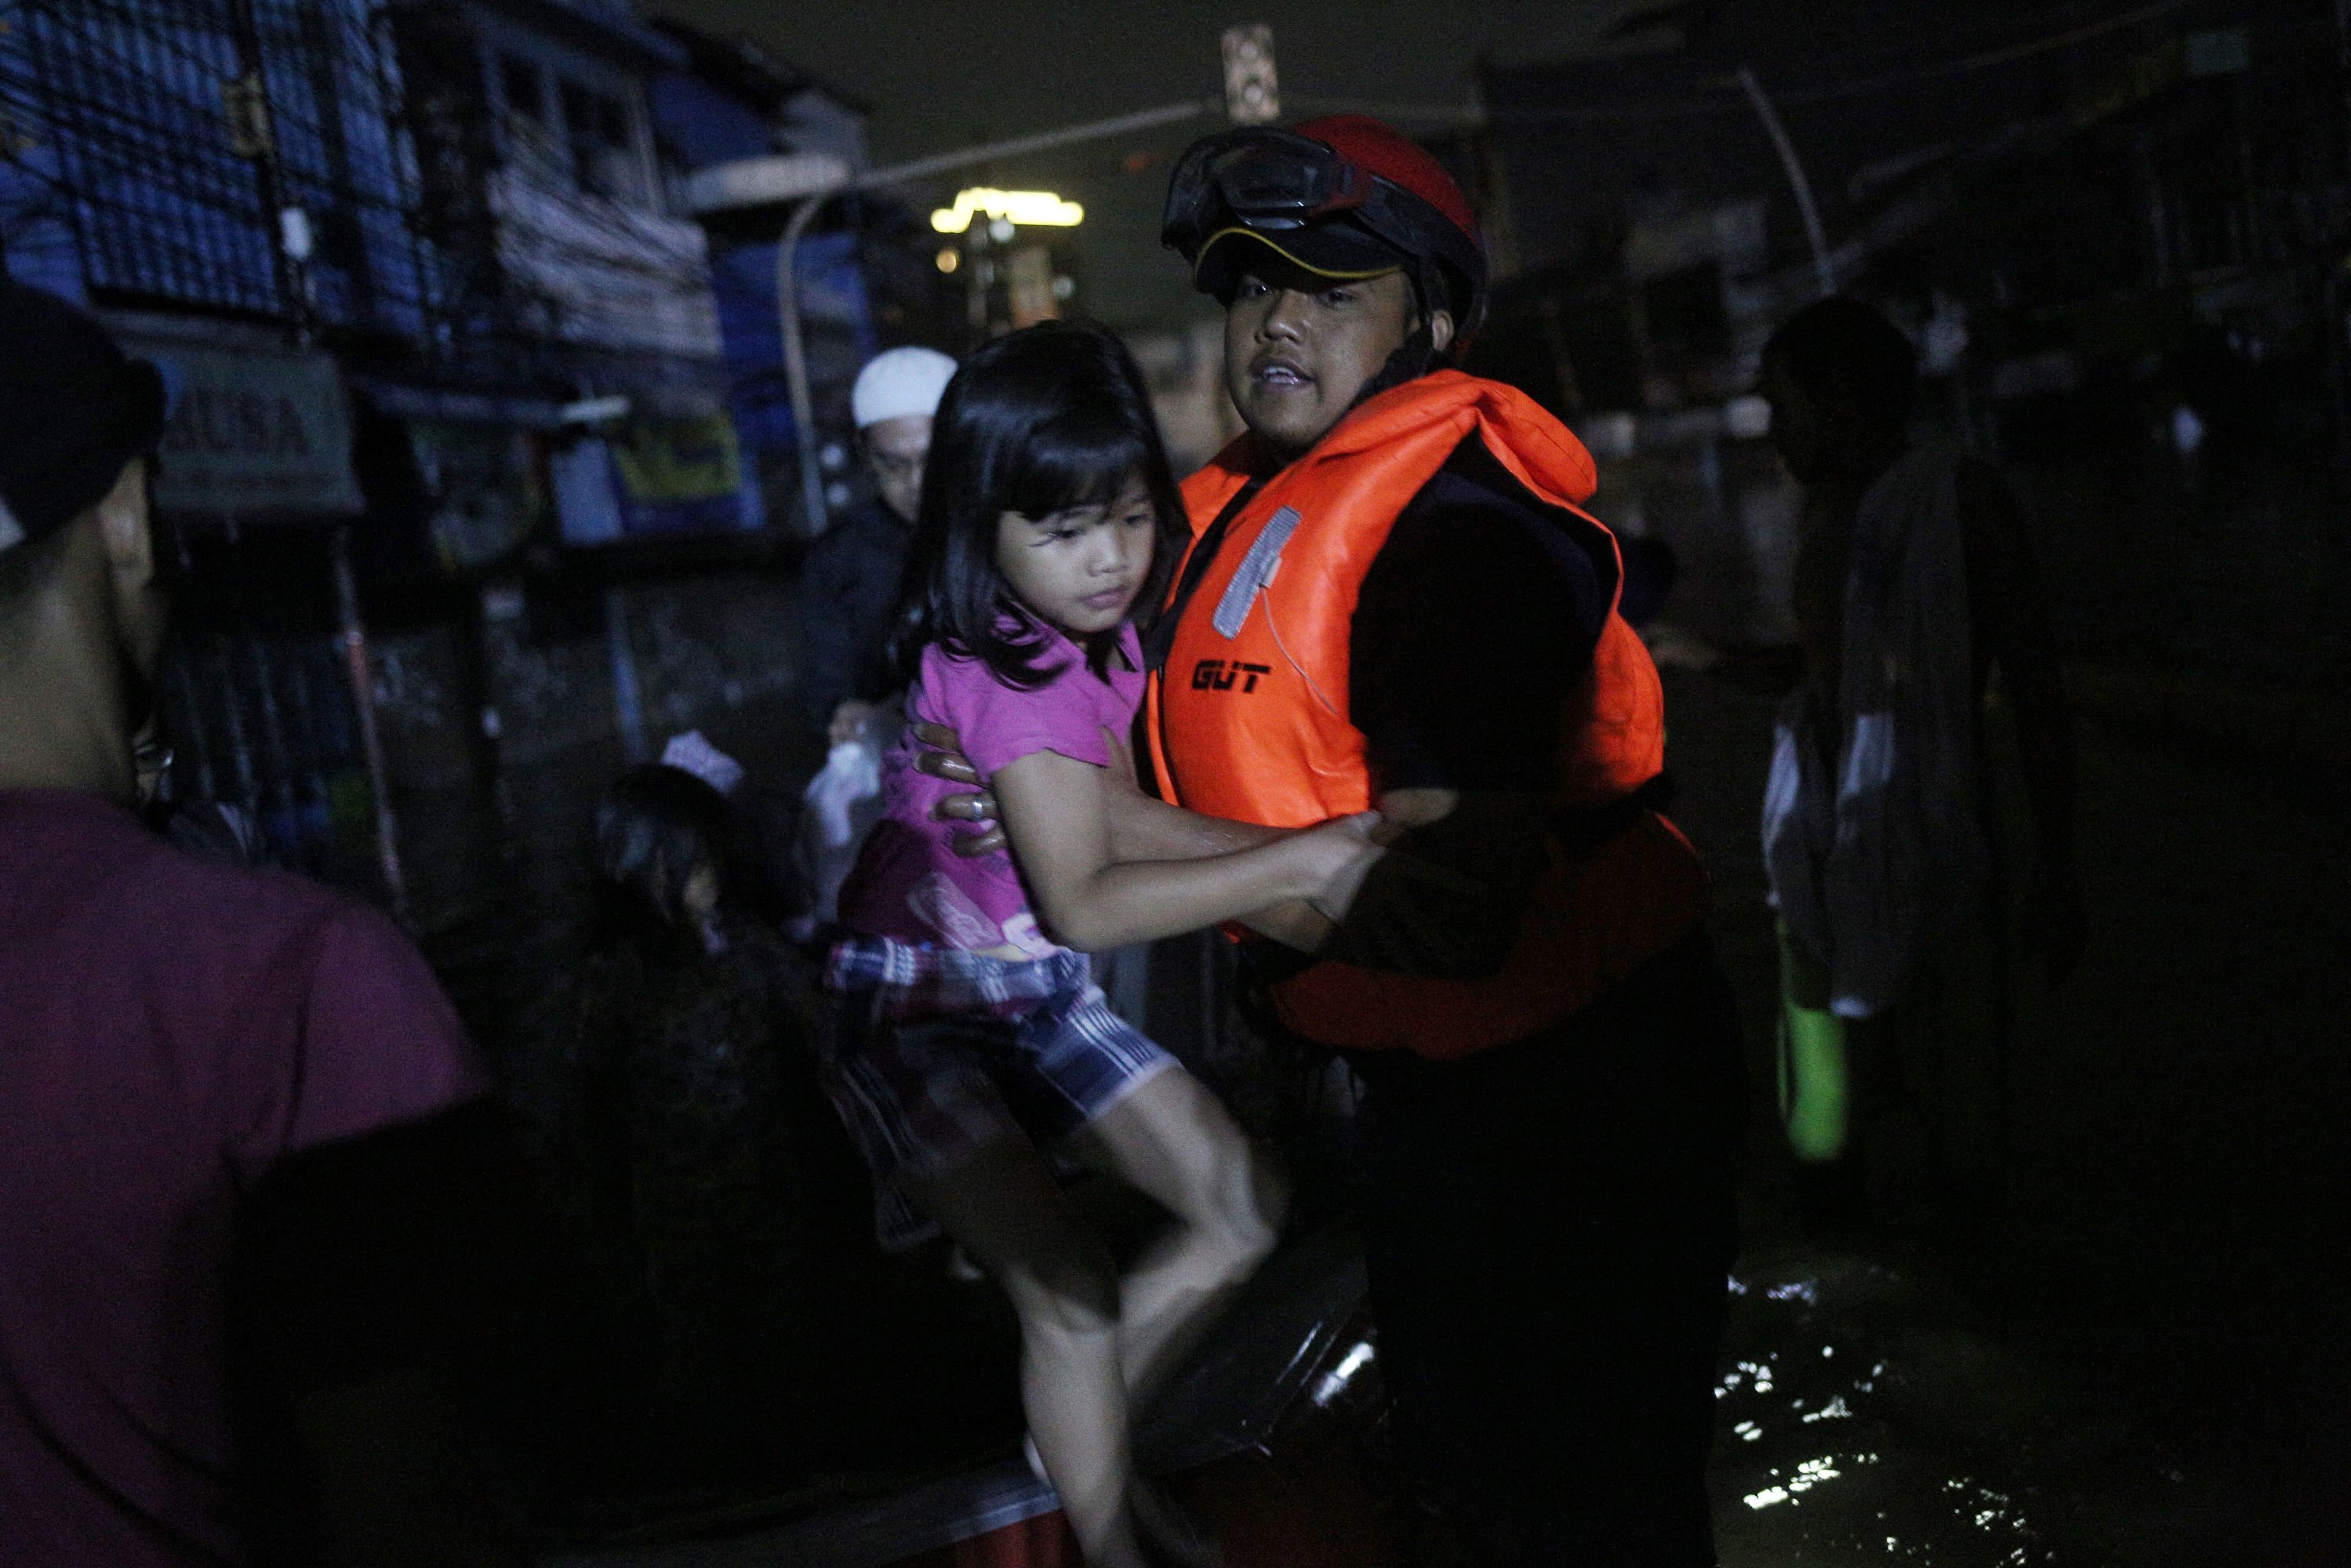 Untuk mengevakuasi para korban banjir, BNPB memperkirakan setidaknya diperlukan 134 unit perahu karet dengan 2.700 personil time evakuasi, dari banjir banjir yang melanda Jabodetabek sejak Rabu (1/1) dini hari. Pengungsi tersebut tersebar pada 302 lokasi di seluruh Jakarta.